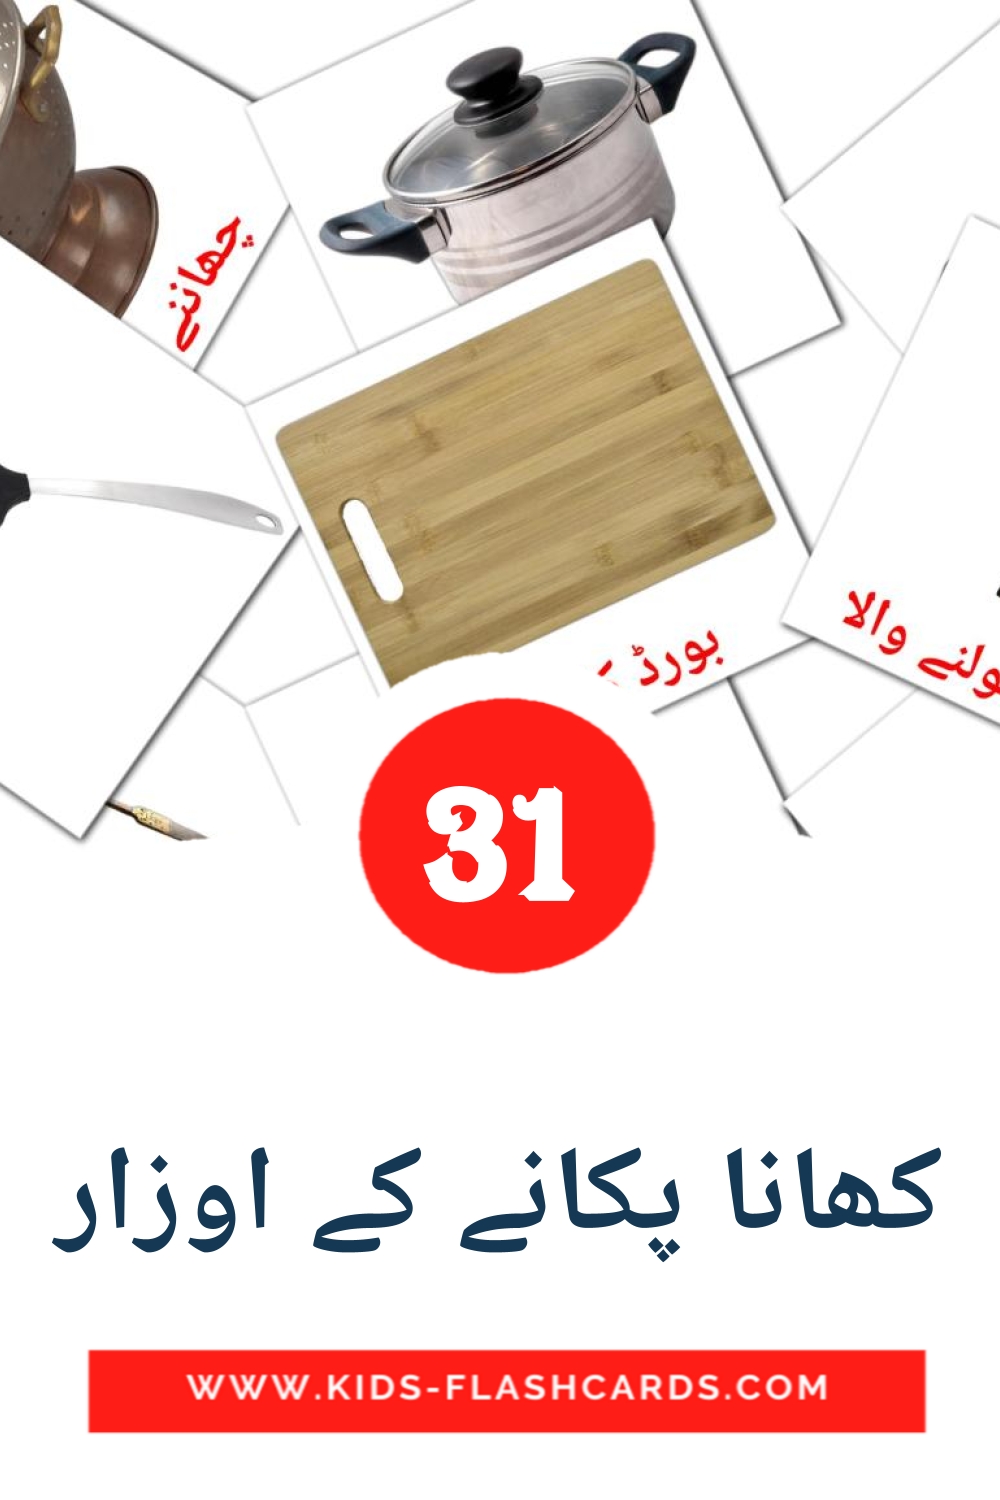 31 Cartões com Imagens de کھانا پکانے کے اوزار para Jardim de Infância em urdu